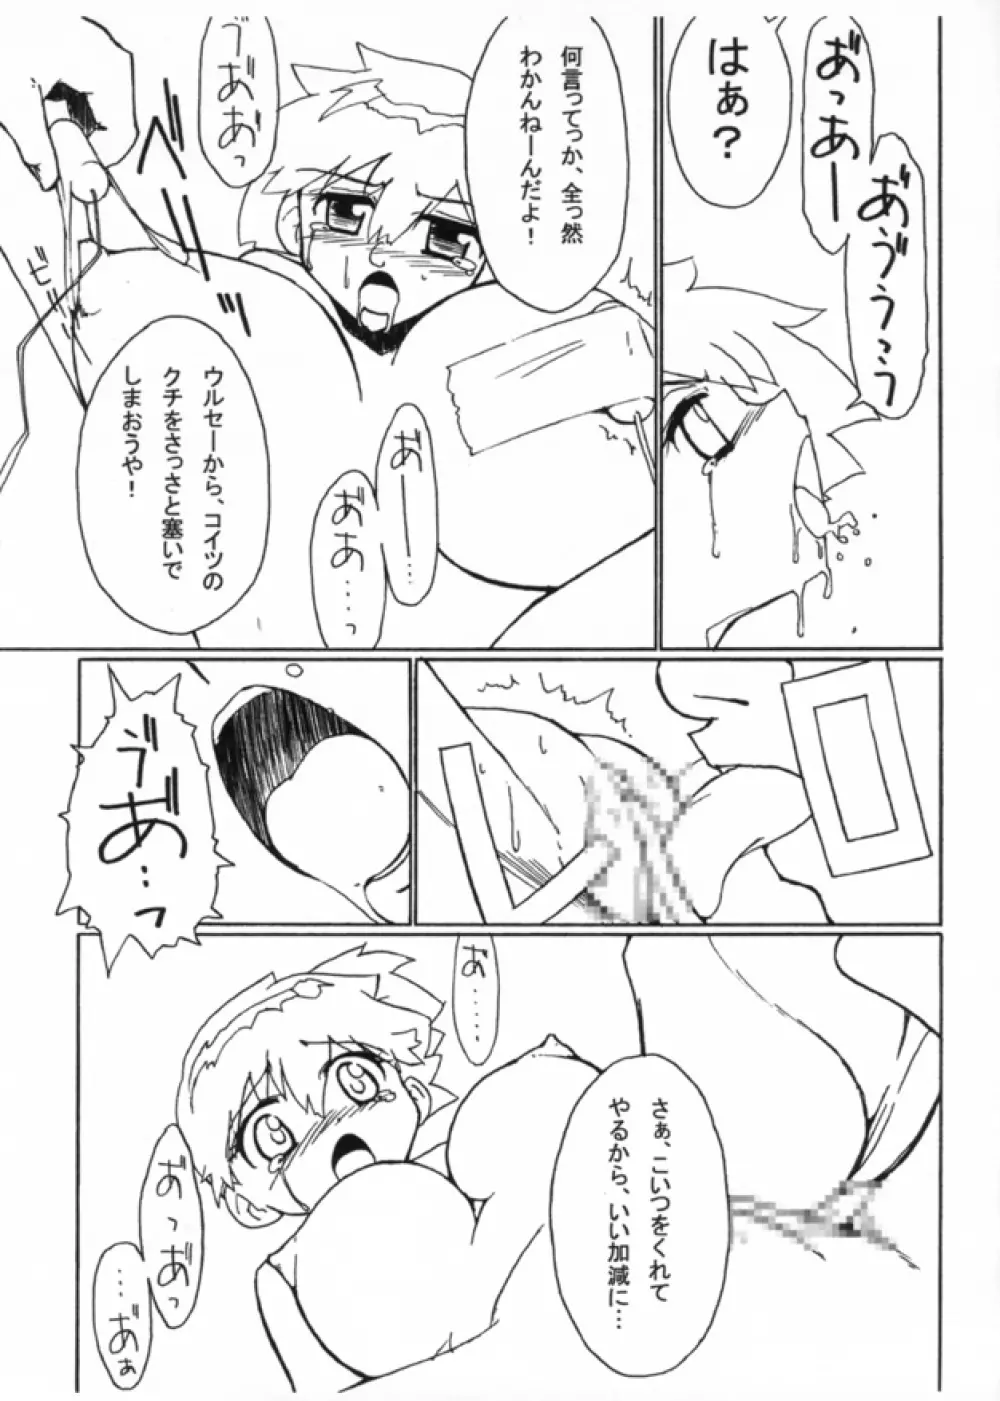 KASUMIX XPLOSION Kasumi Comic part5 - page55